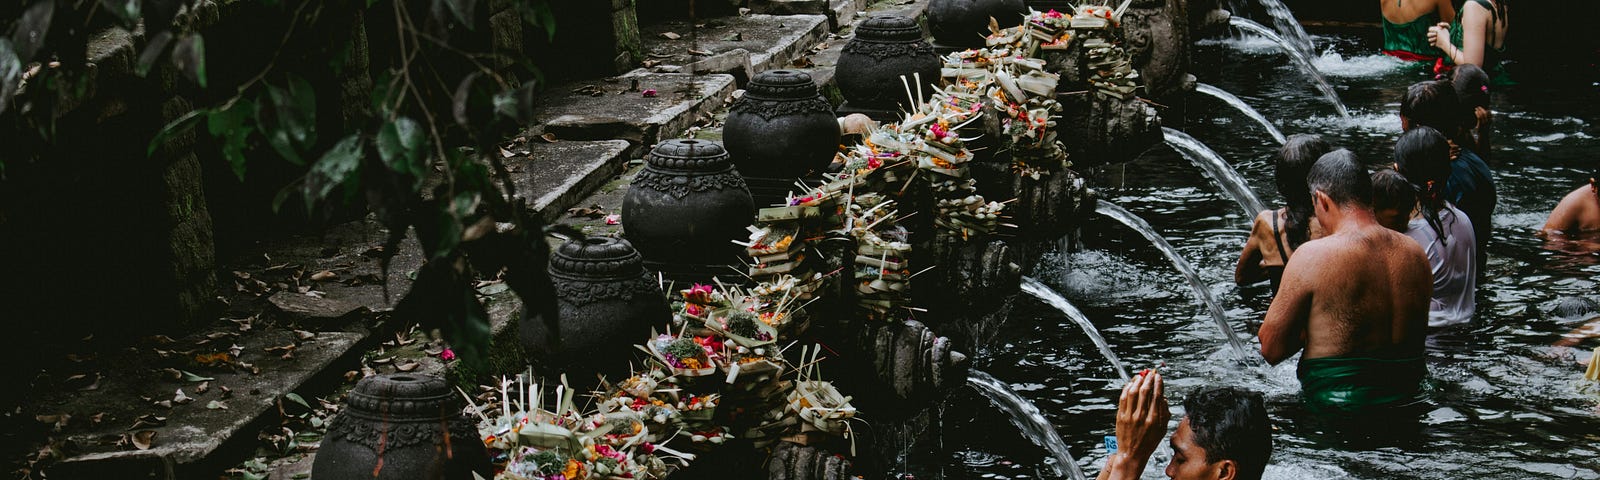 People bathing in a Balinese Hot Spring Pool